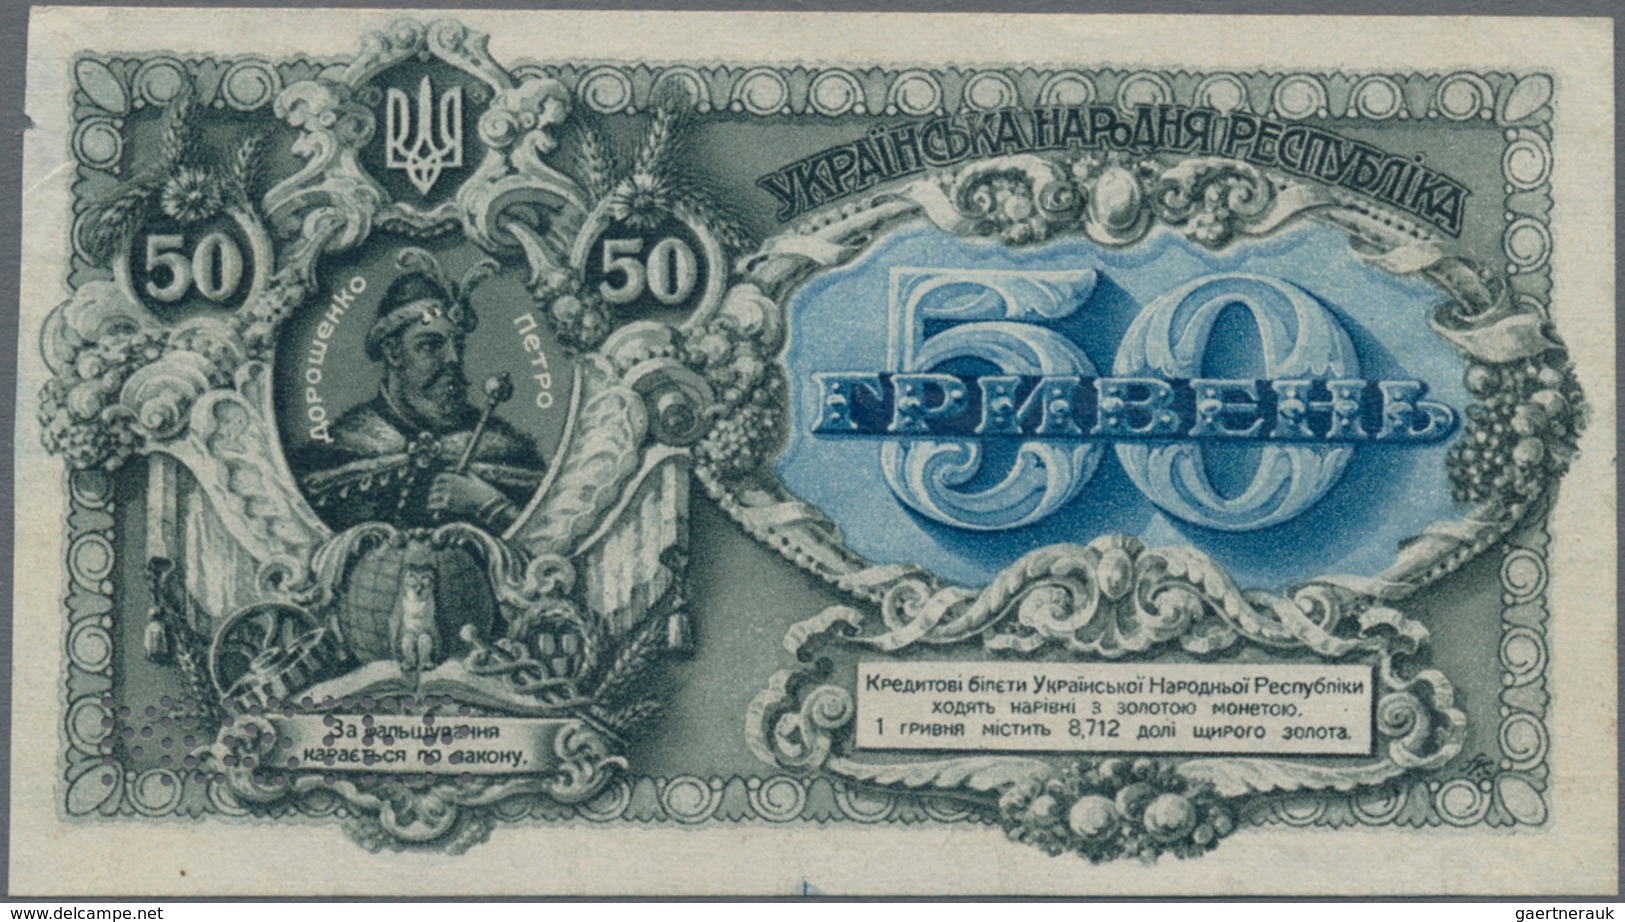 Ukraina / Ukraine: 50 Hriven 1920 P. 26, Rare Unissued Banknote, Perforated "MUSTER", No Folds, But - Ukraine